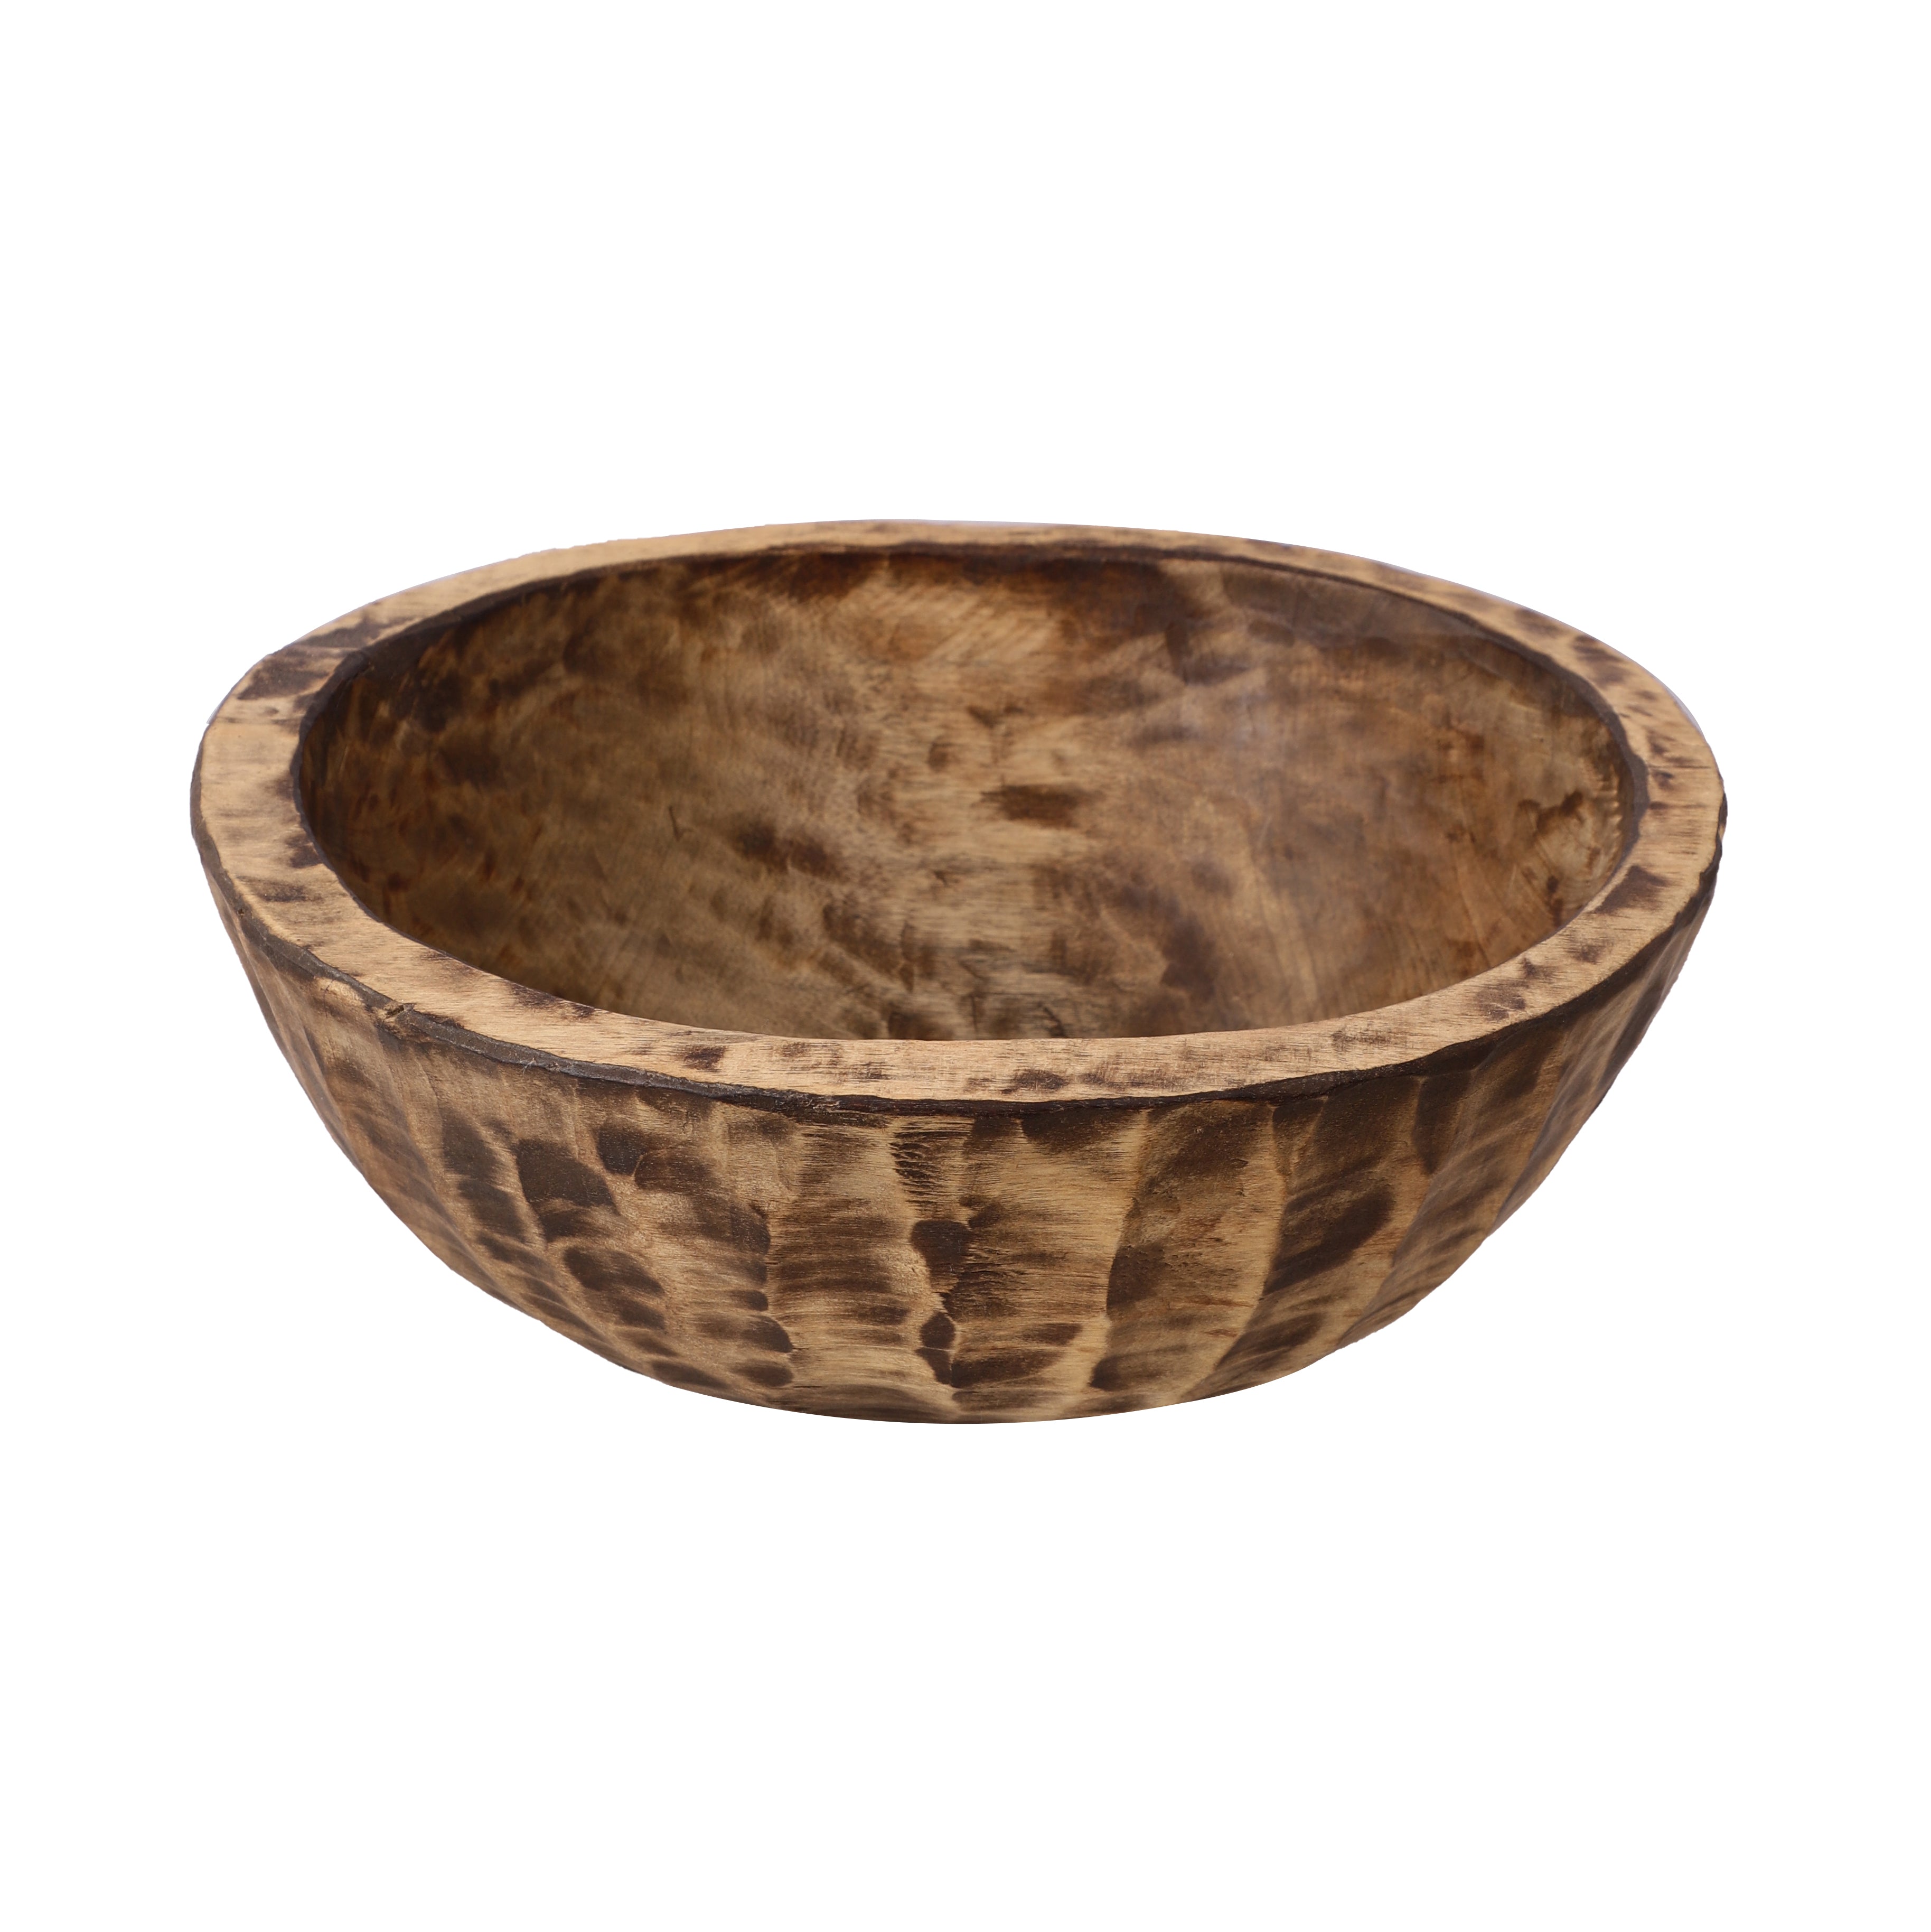 Antique Sculpted Wooden Bowl